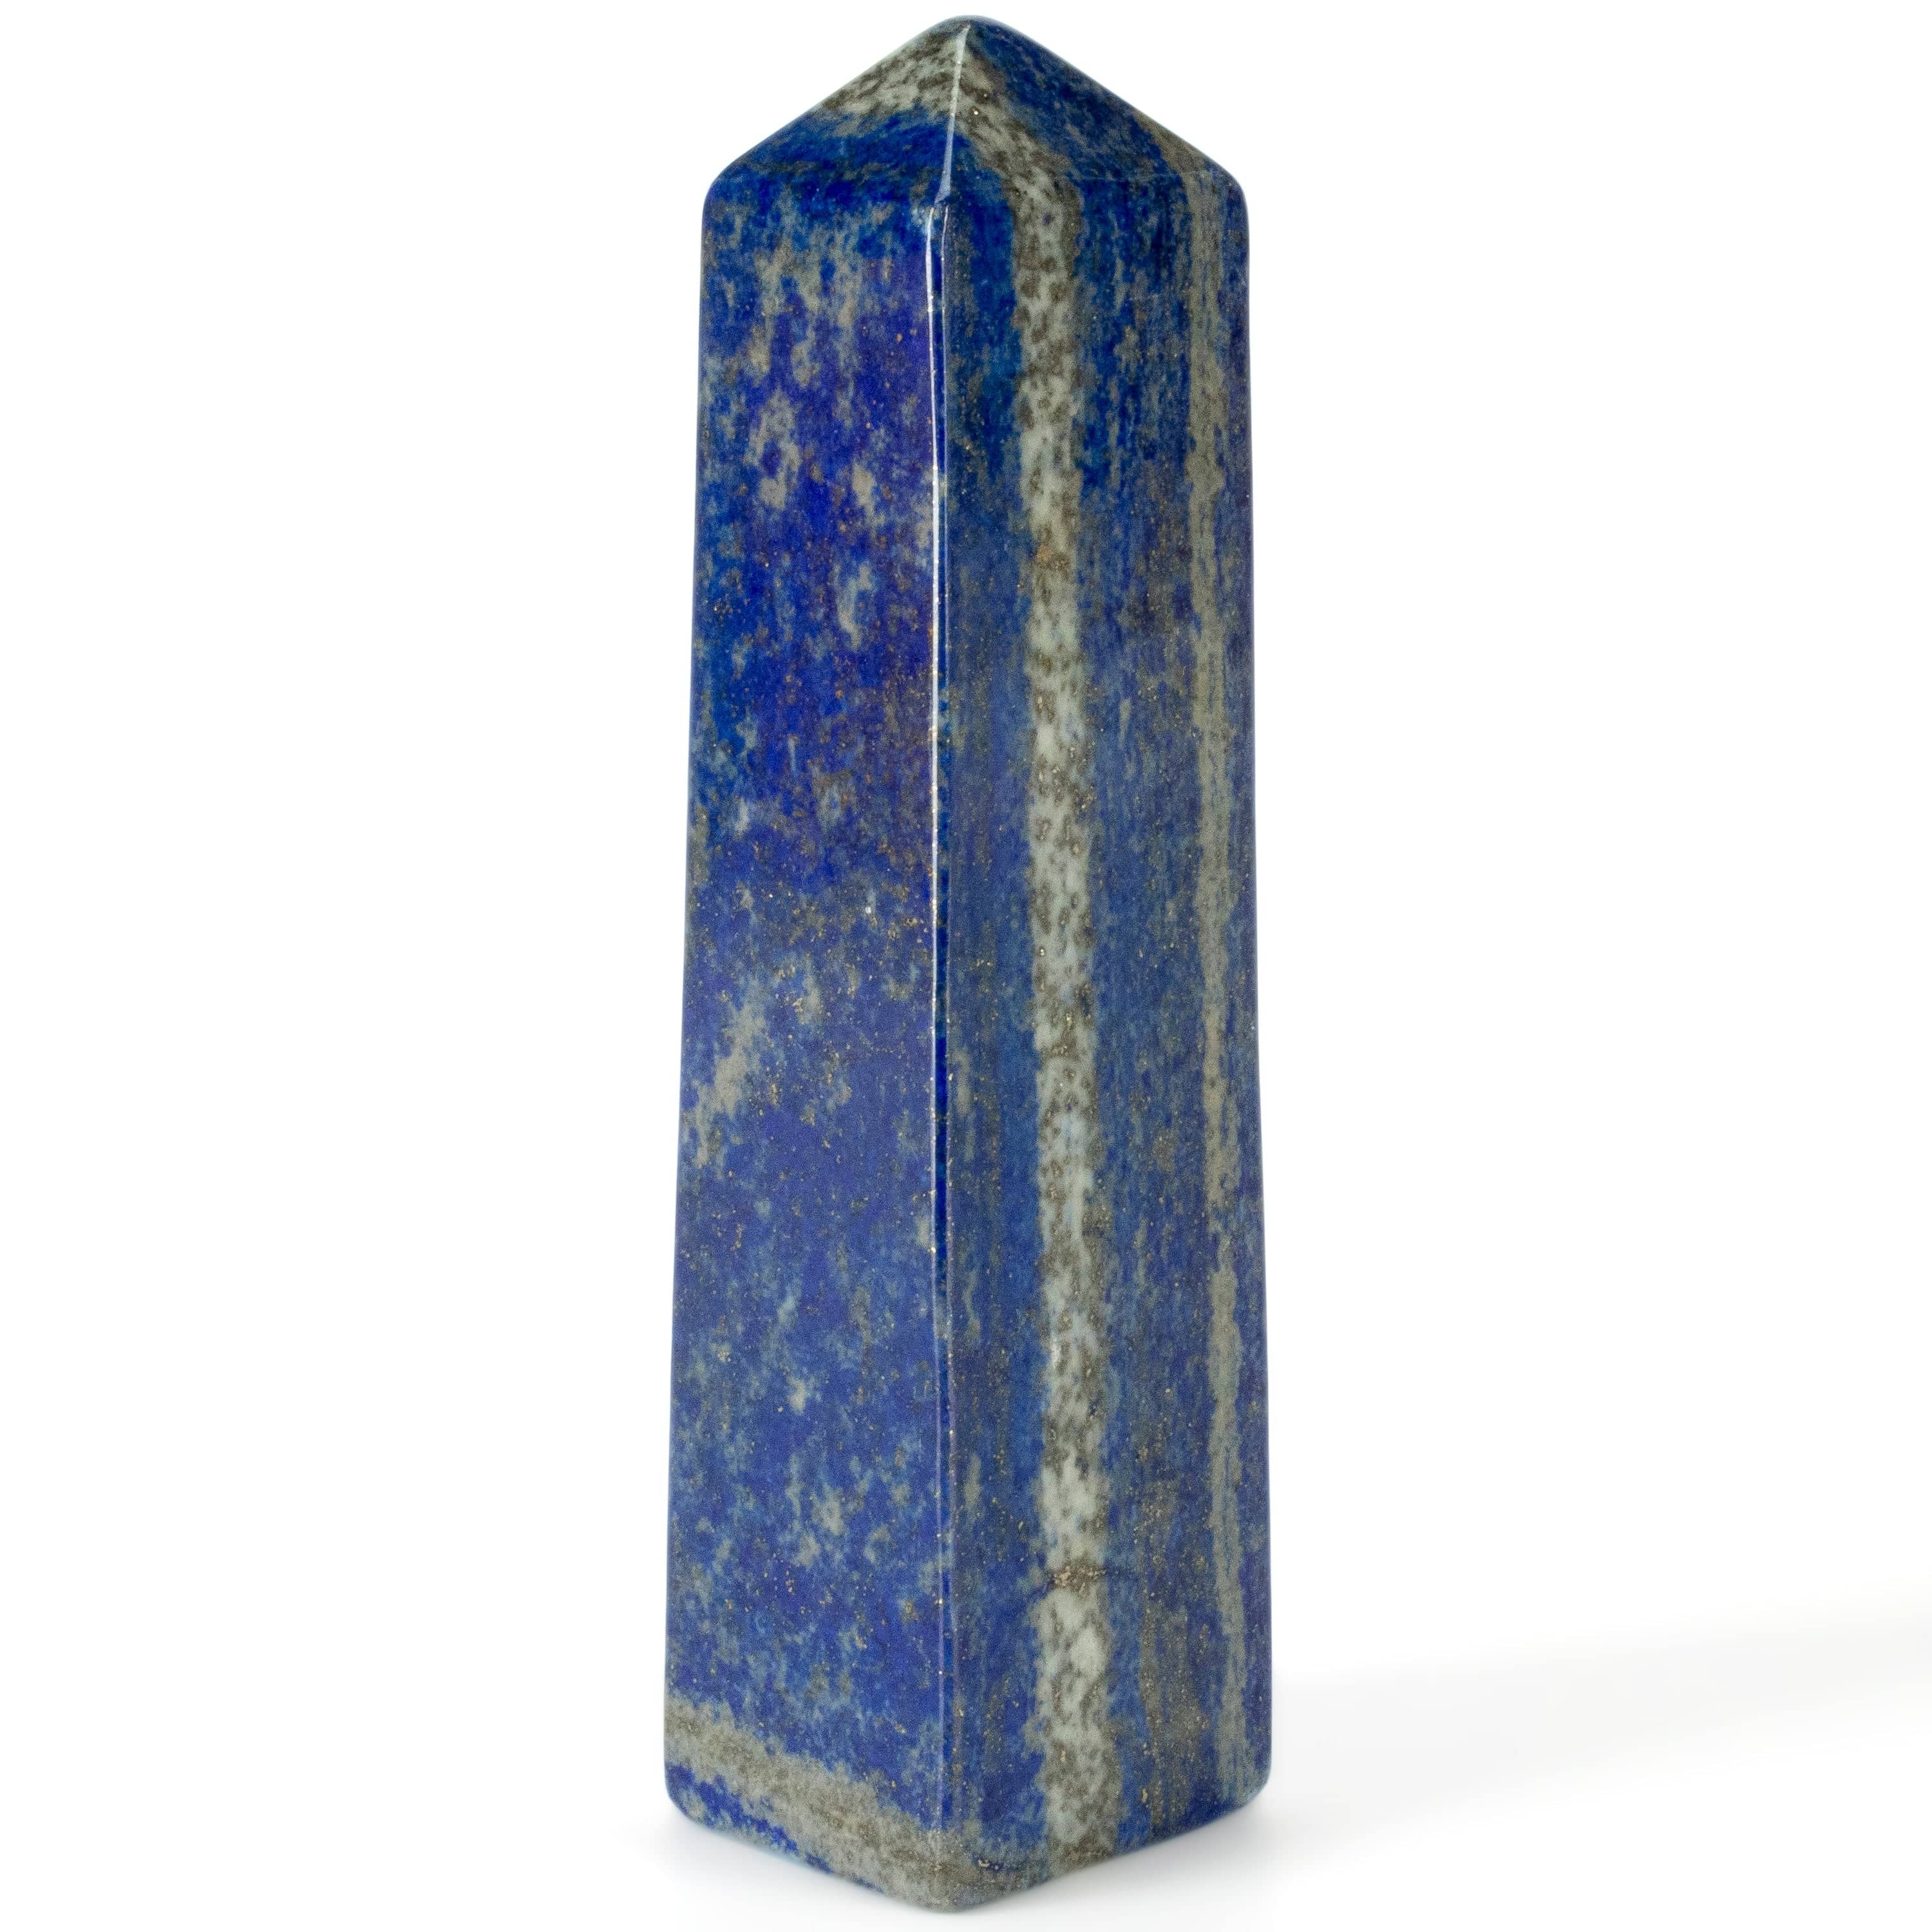 Kalifano Lapis Lapis Lazuli Polished Obelisk from Afghanistan - 5" / 282 grams LPOB600.003